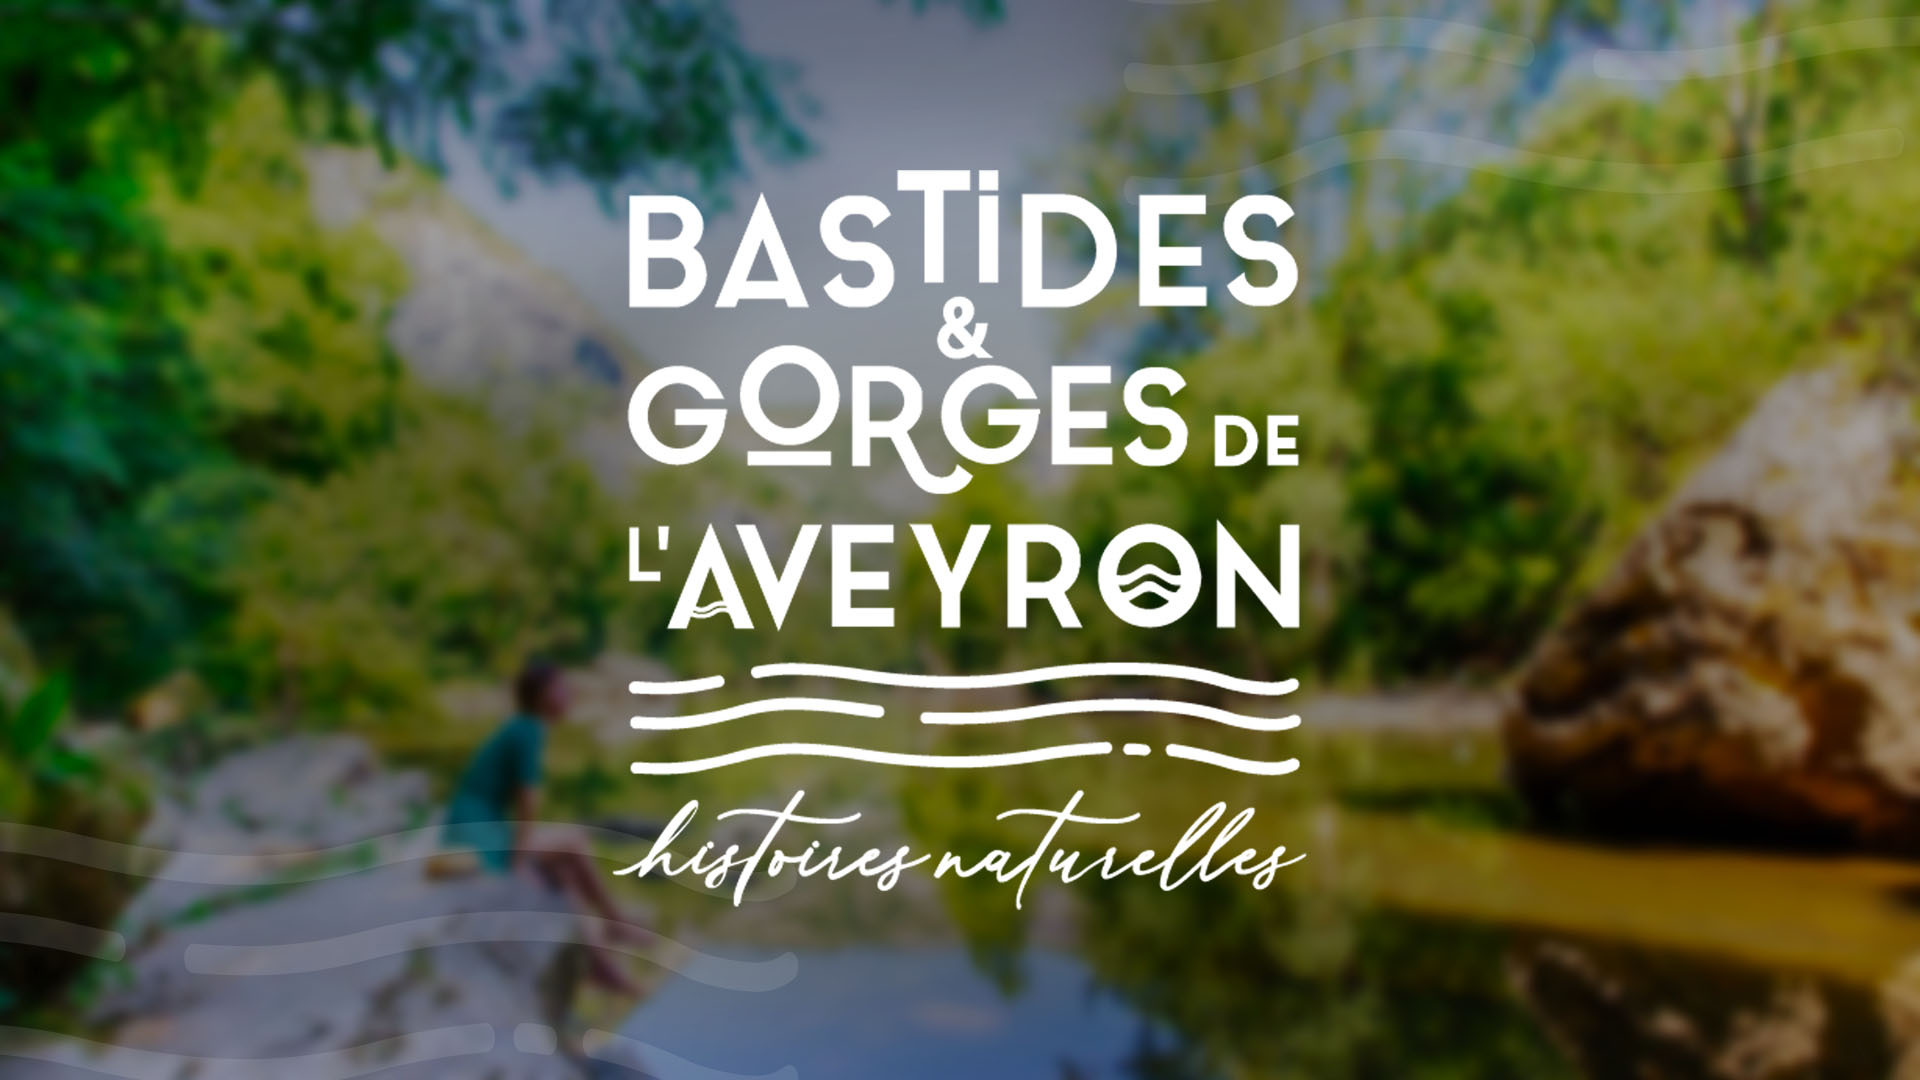 Bastide e gole dell'Aveyron